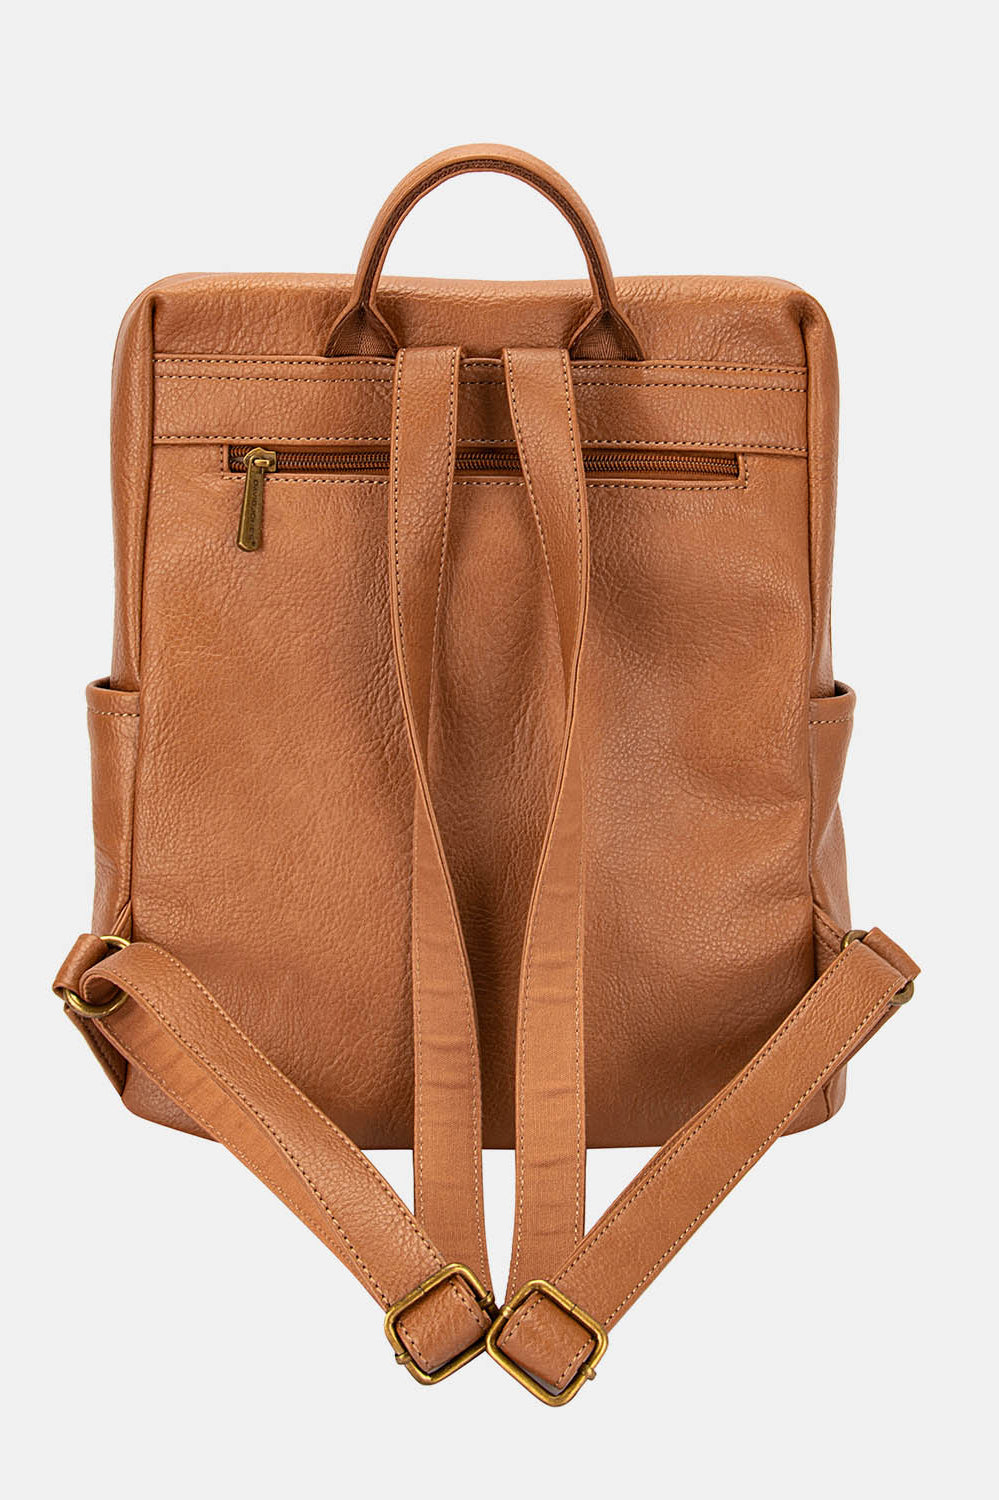 David Jones PU Leather Backpack Bag Trendsi